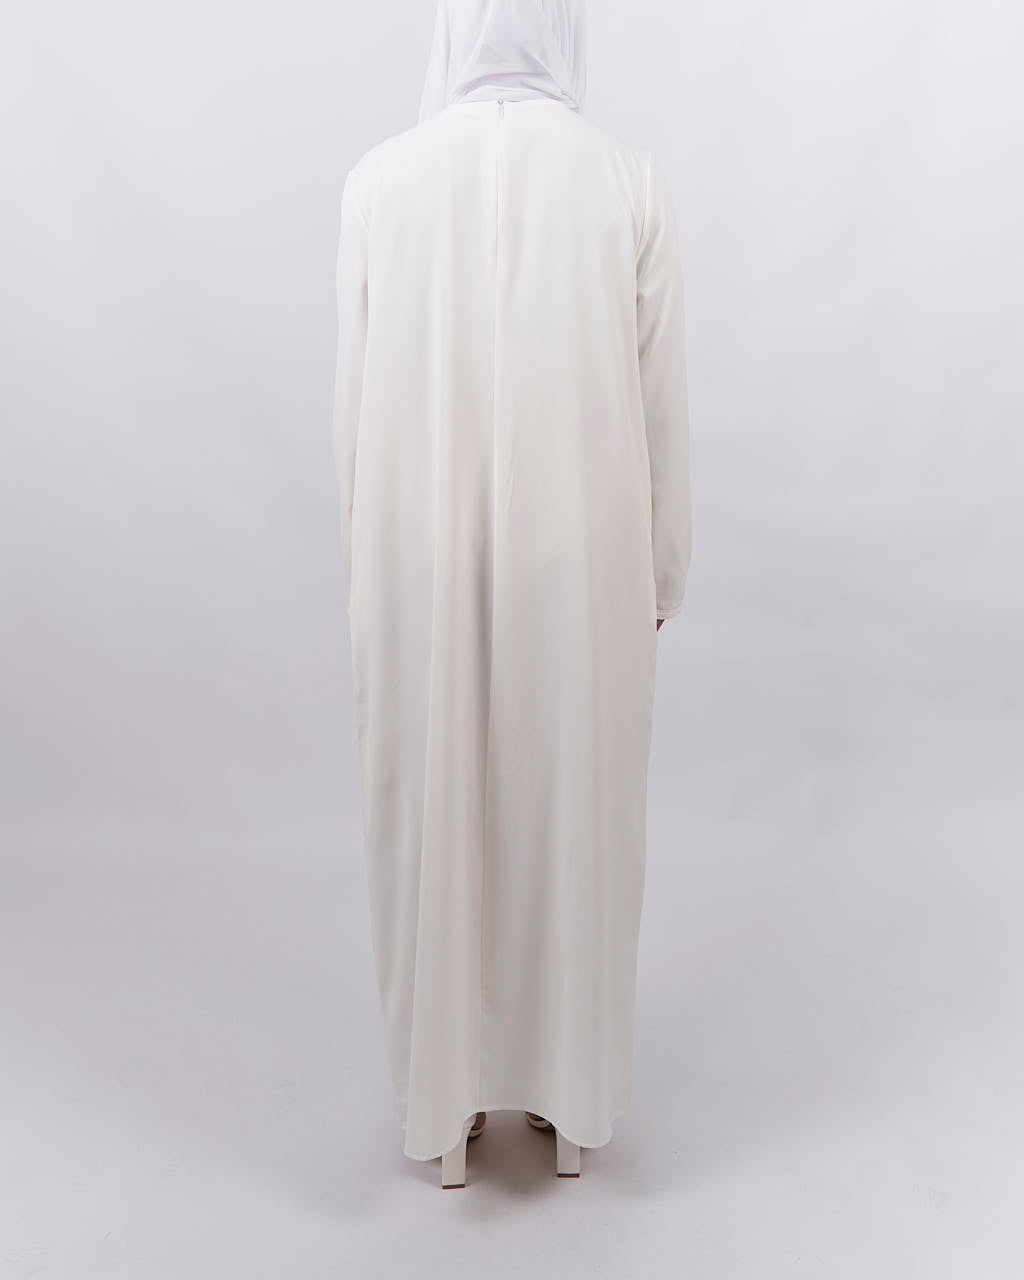 Essential Abaya - White - Essential Abaya - Fajr Noor